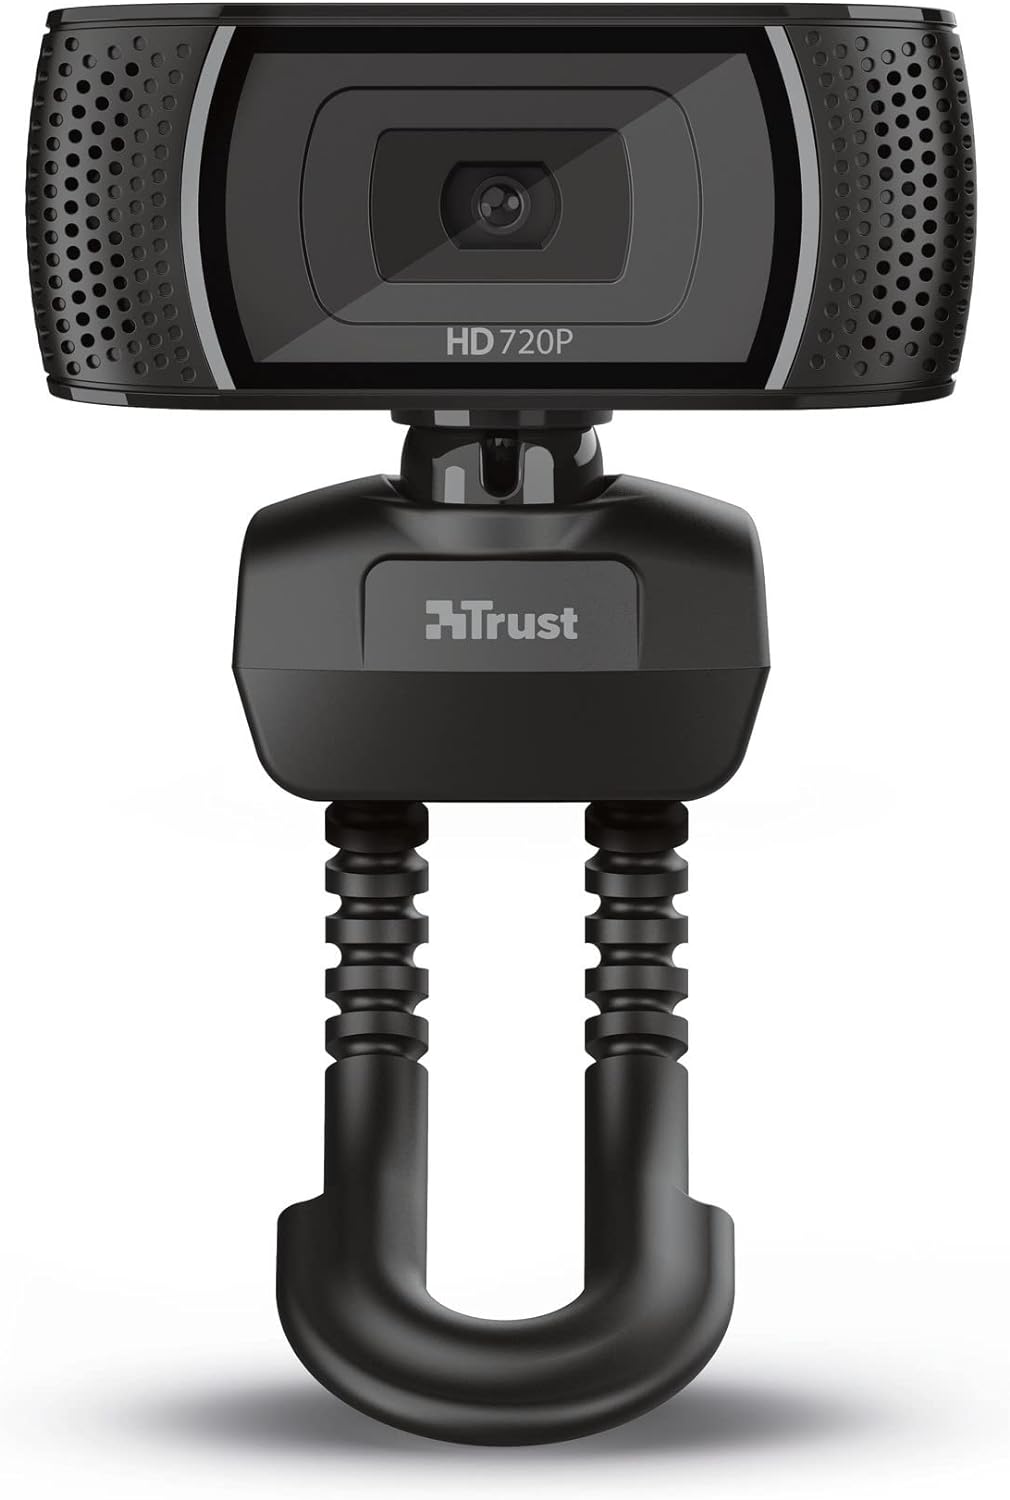 Trust Trino HD Webcam - Black - Pristine